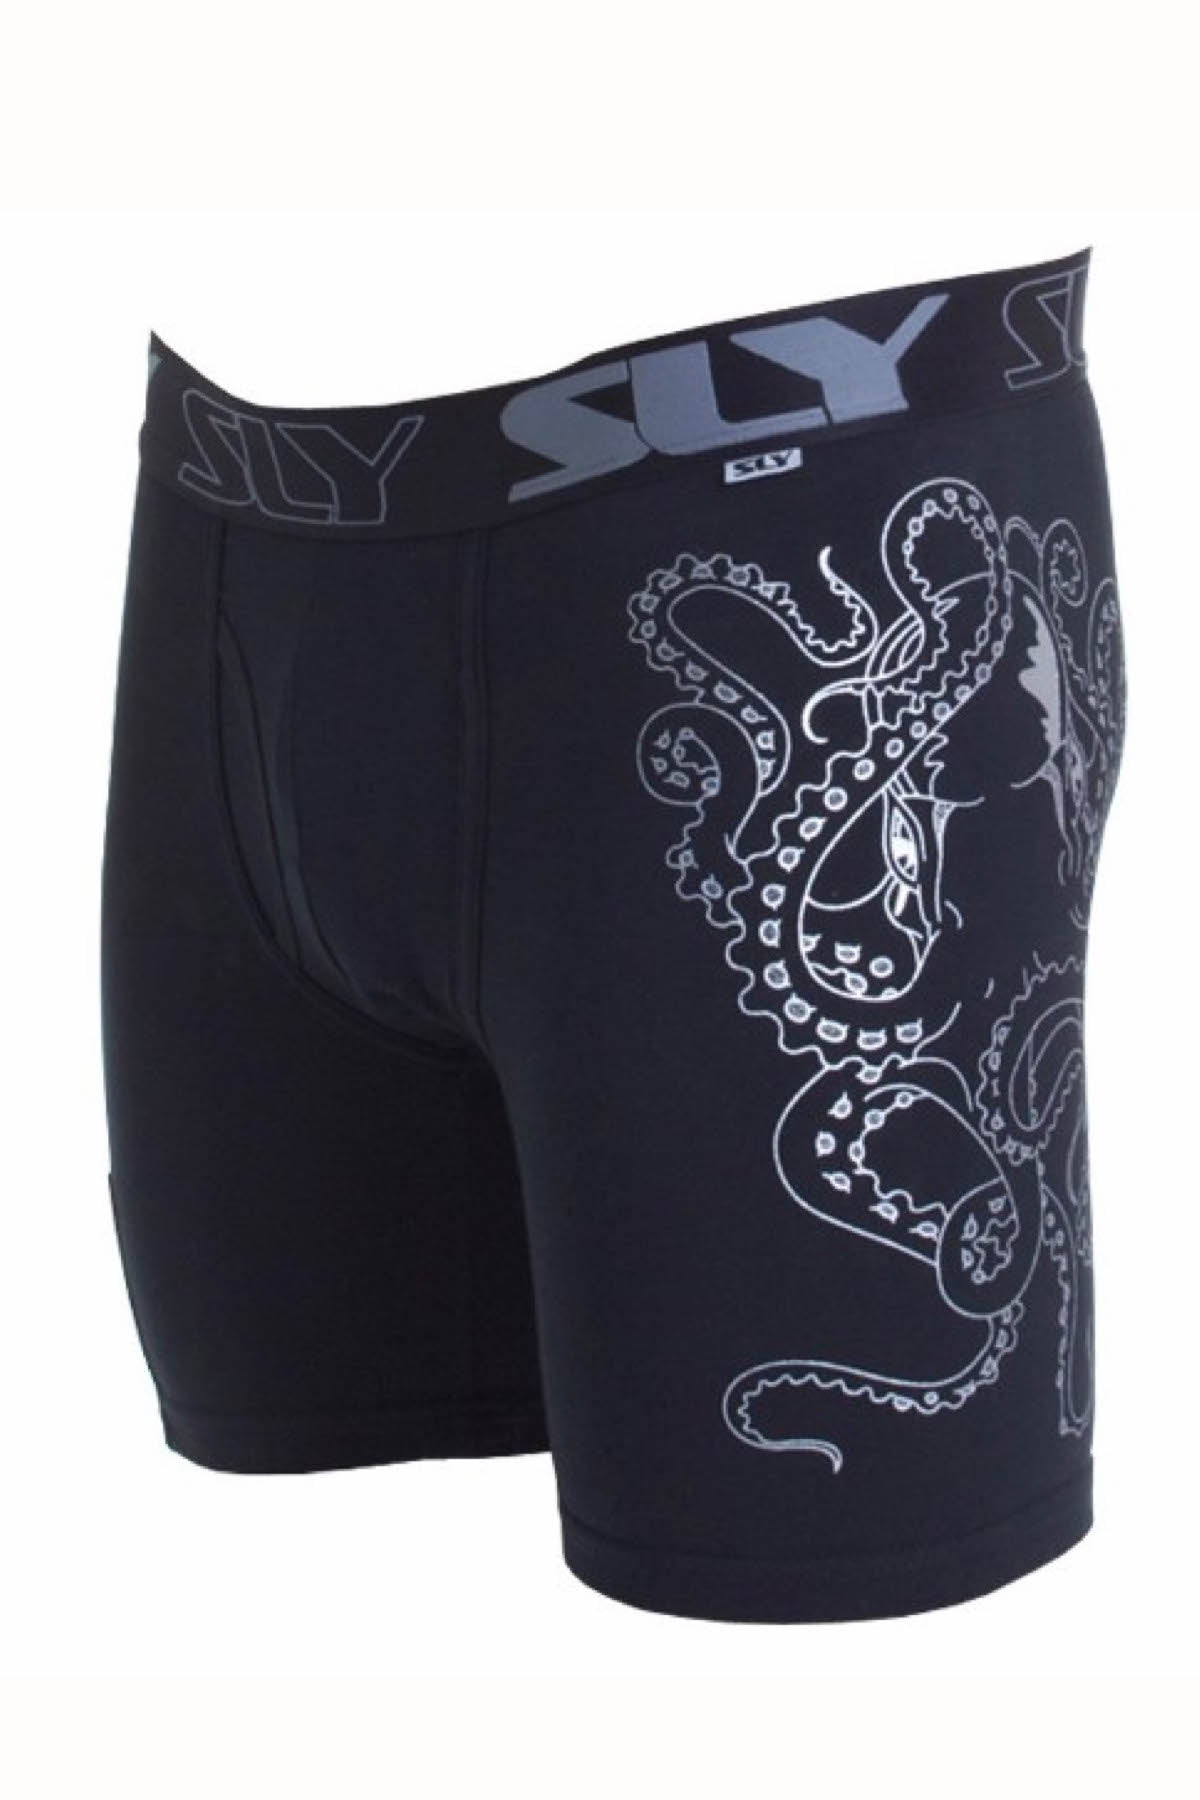 Sly Black & Silver Octopus Boxer Brief - Long